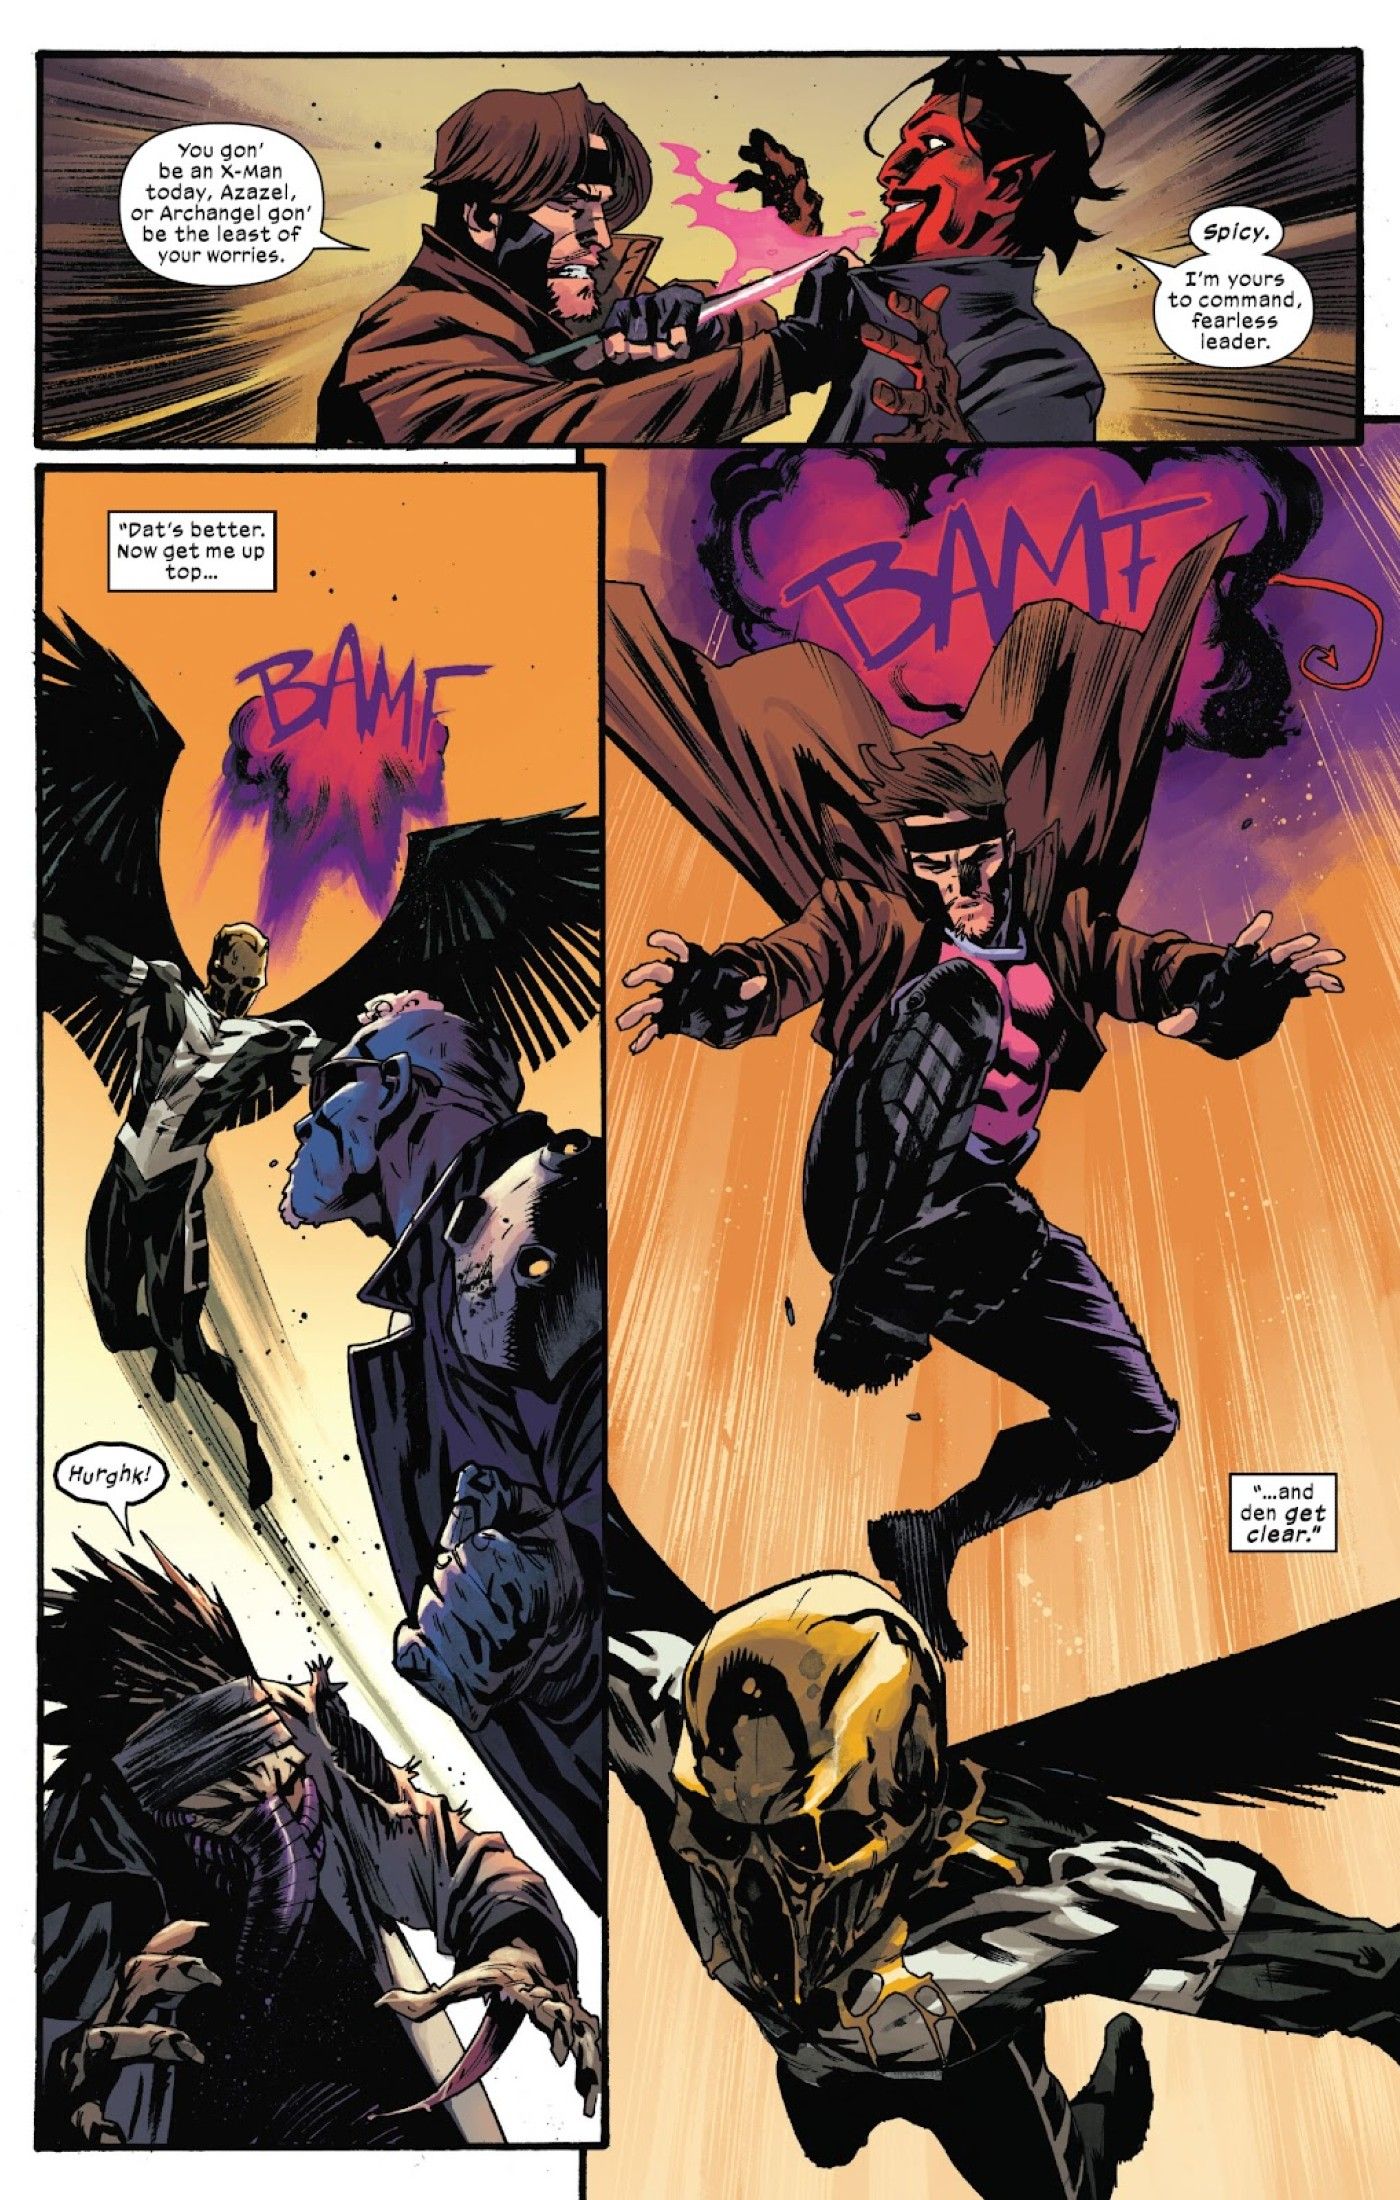 Gambit kills Angel 01